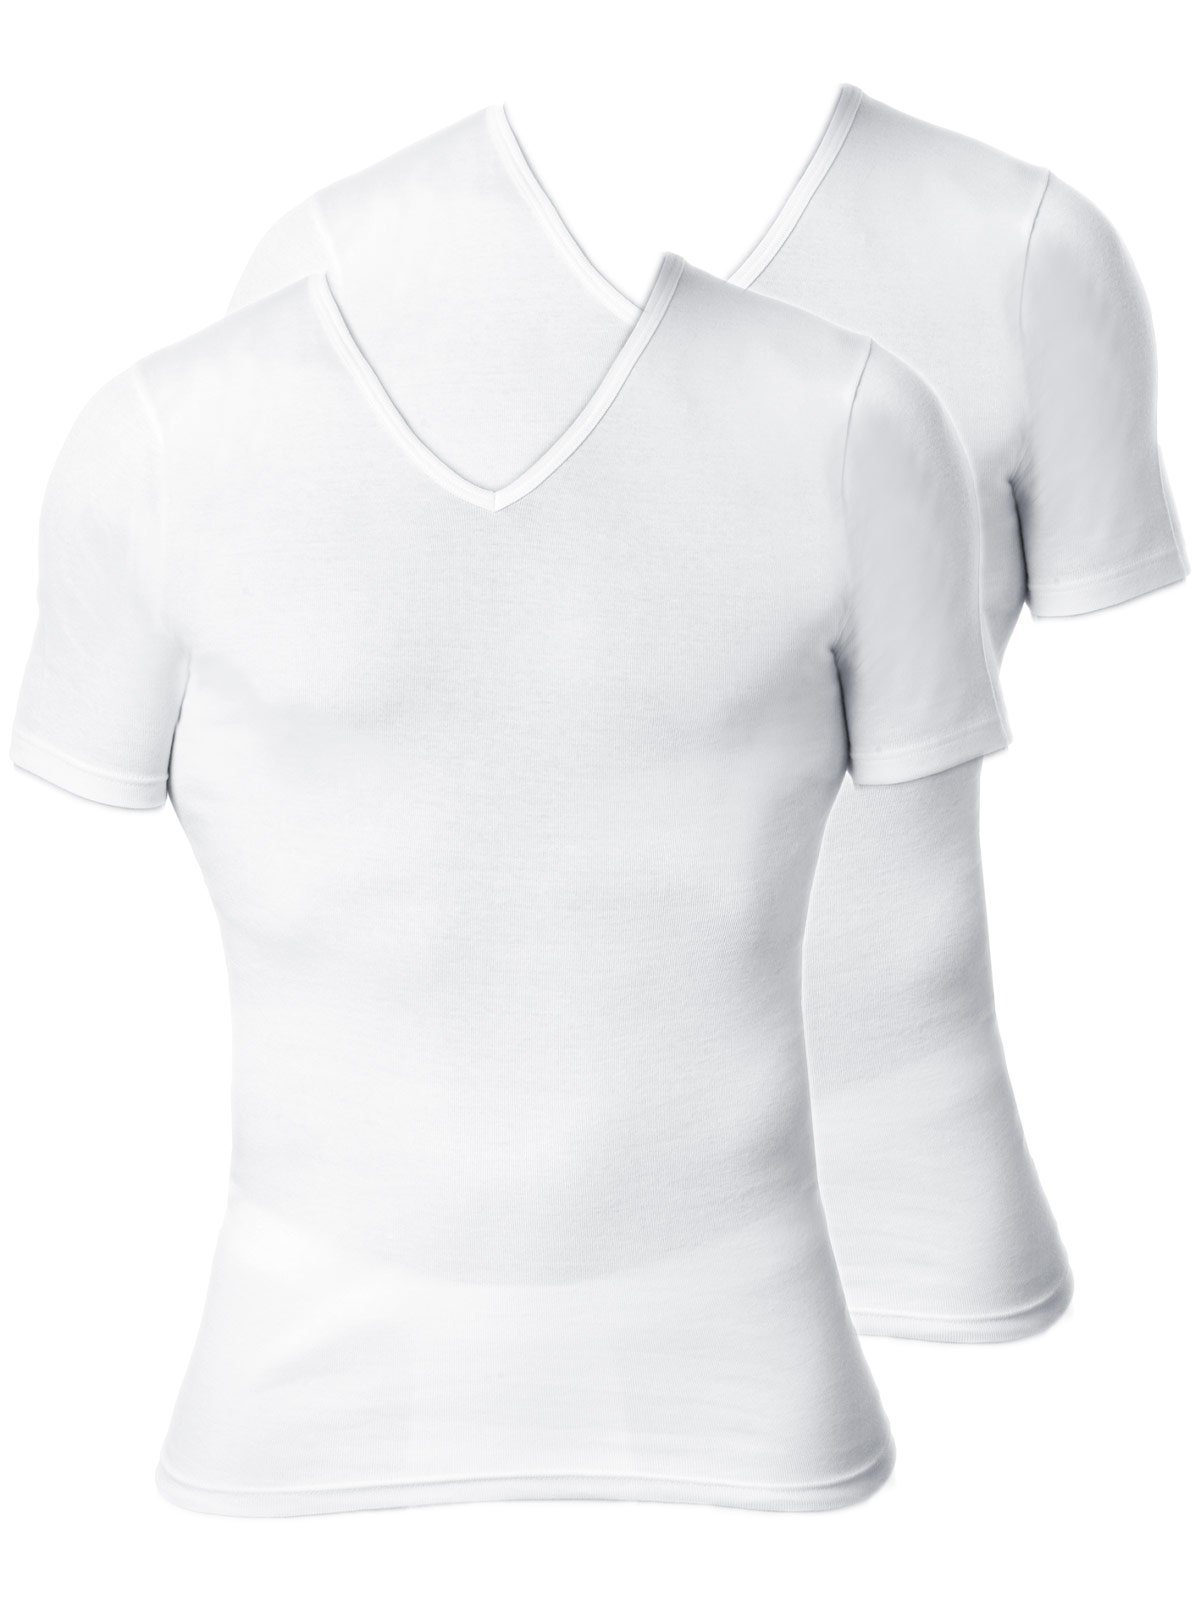 8er Cotton schwarz T-Shirt hohe Unterziehshirt Herren Markenqualität 8-St) KUMPF weiss Bio (Spar-Set, Sparpack